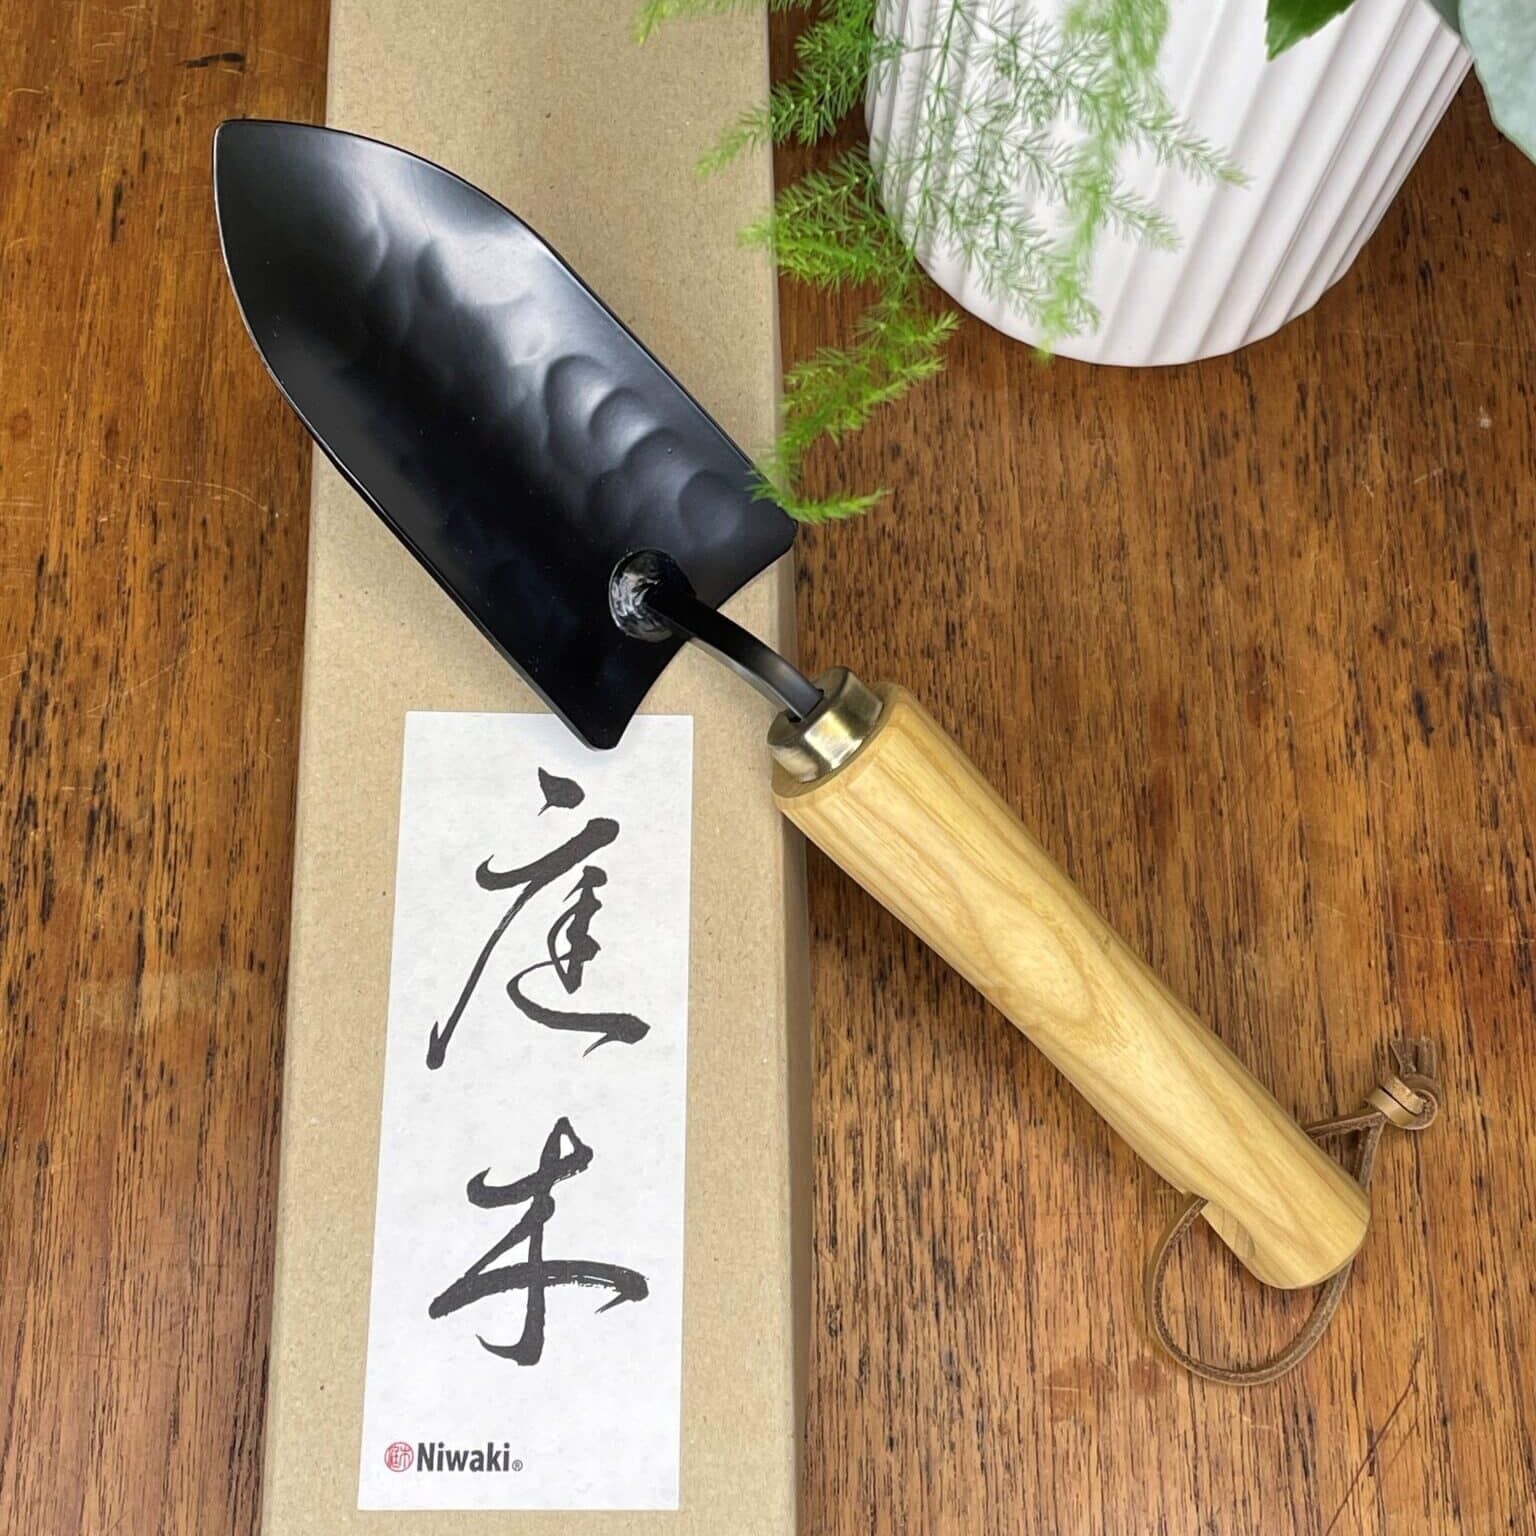 Niwaki ’Moku’ håndsmedet Planteske, lille